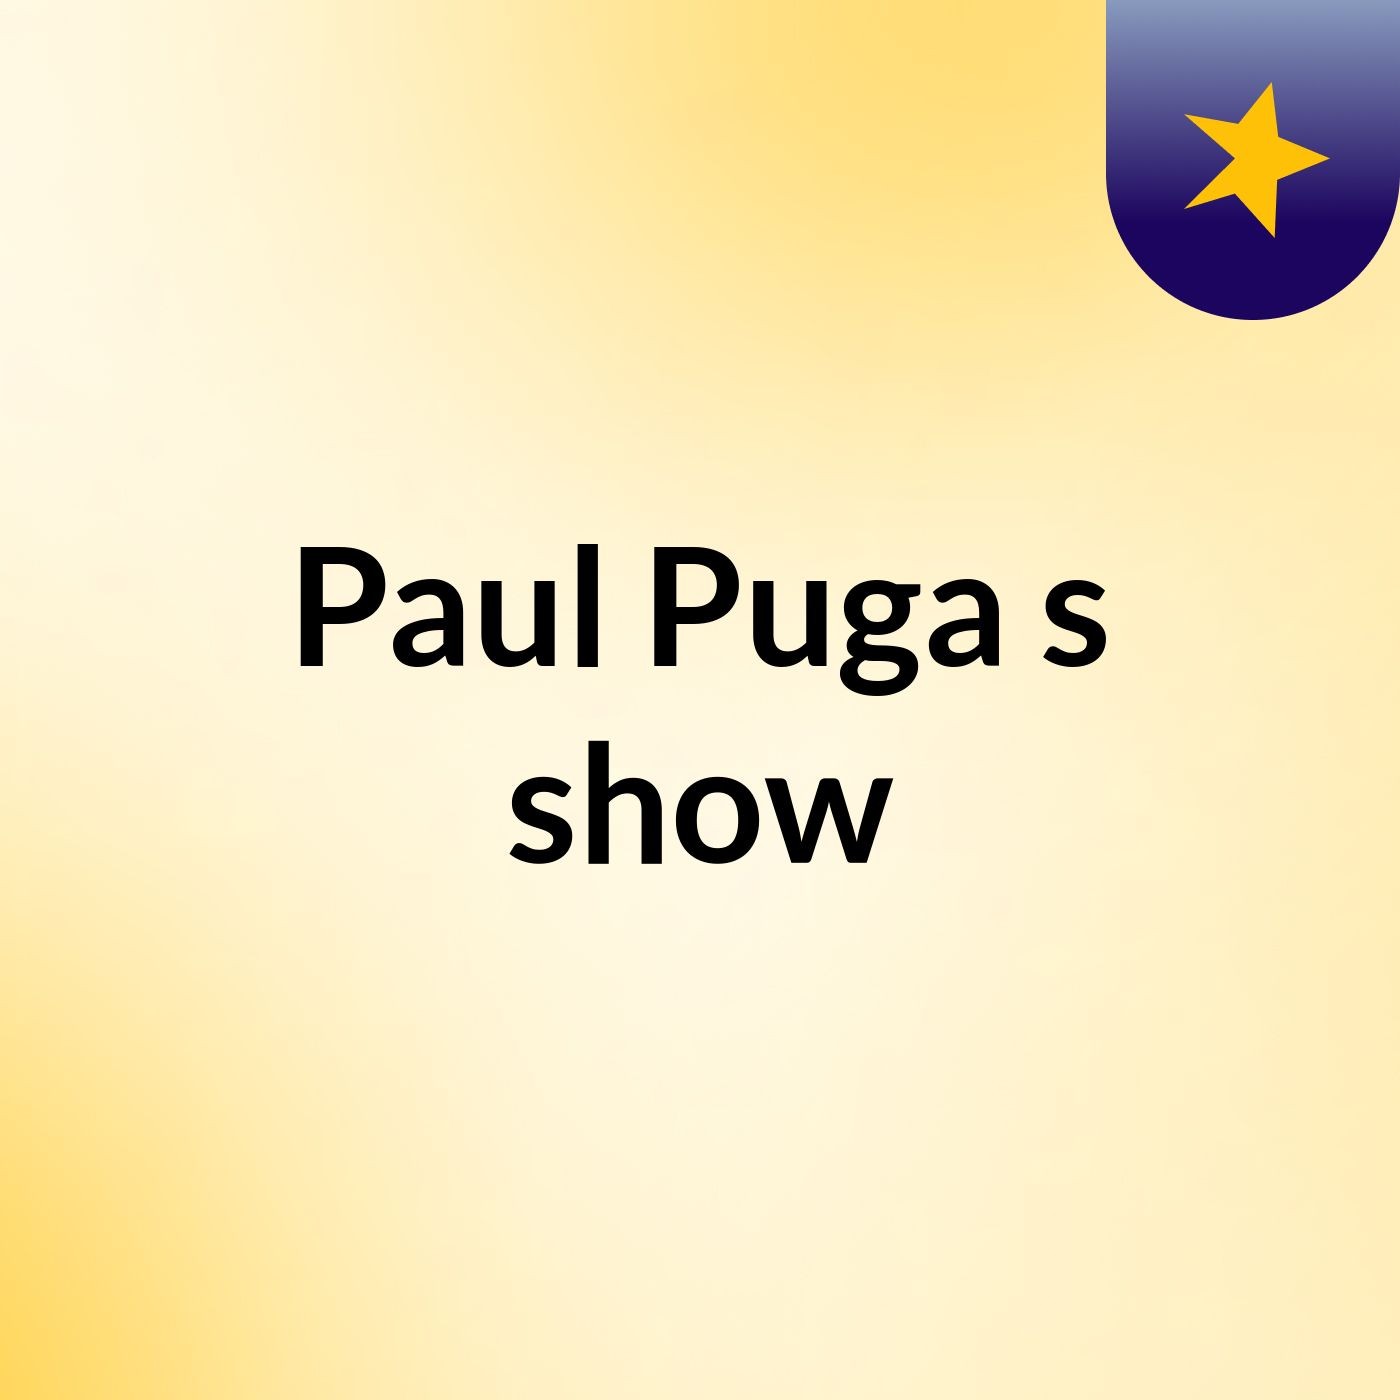 Paul Puga's show